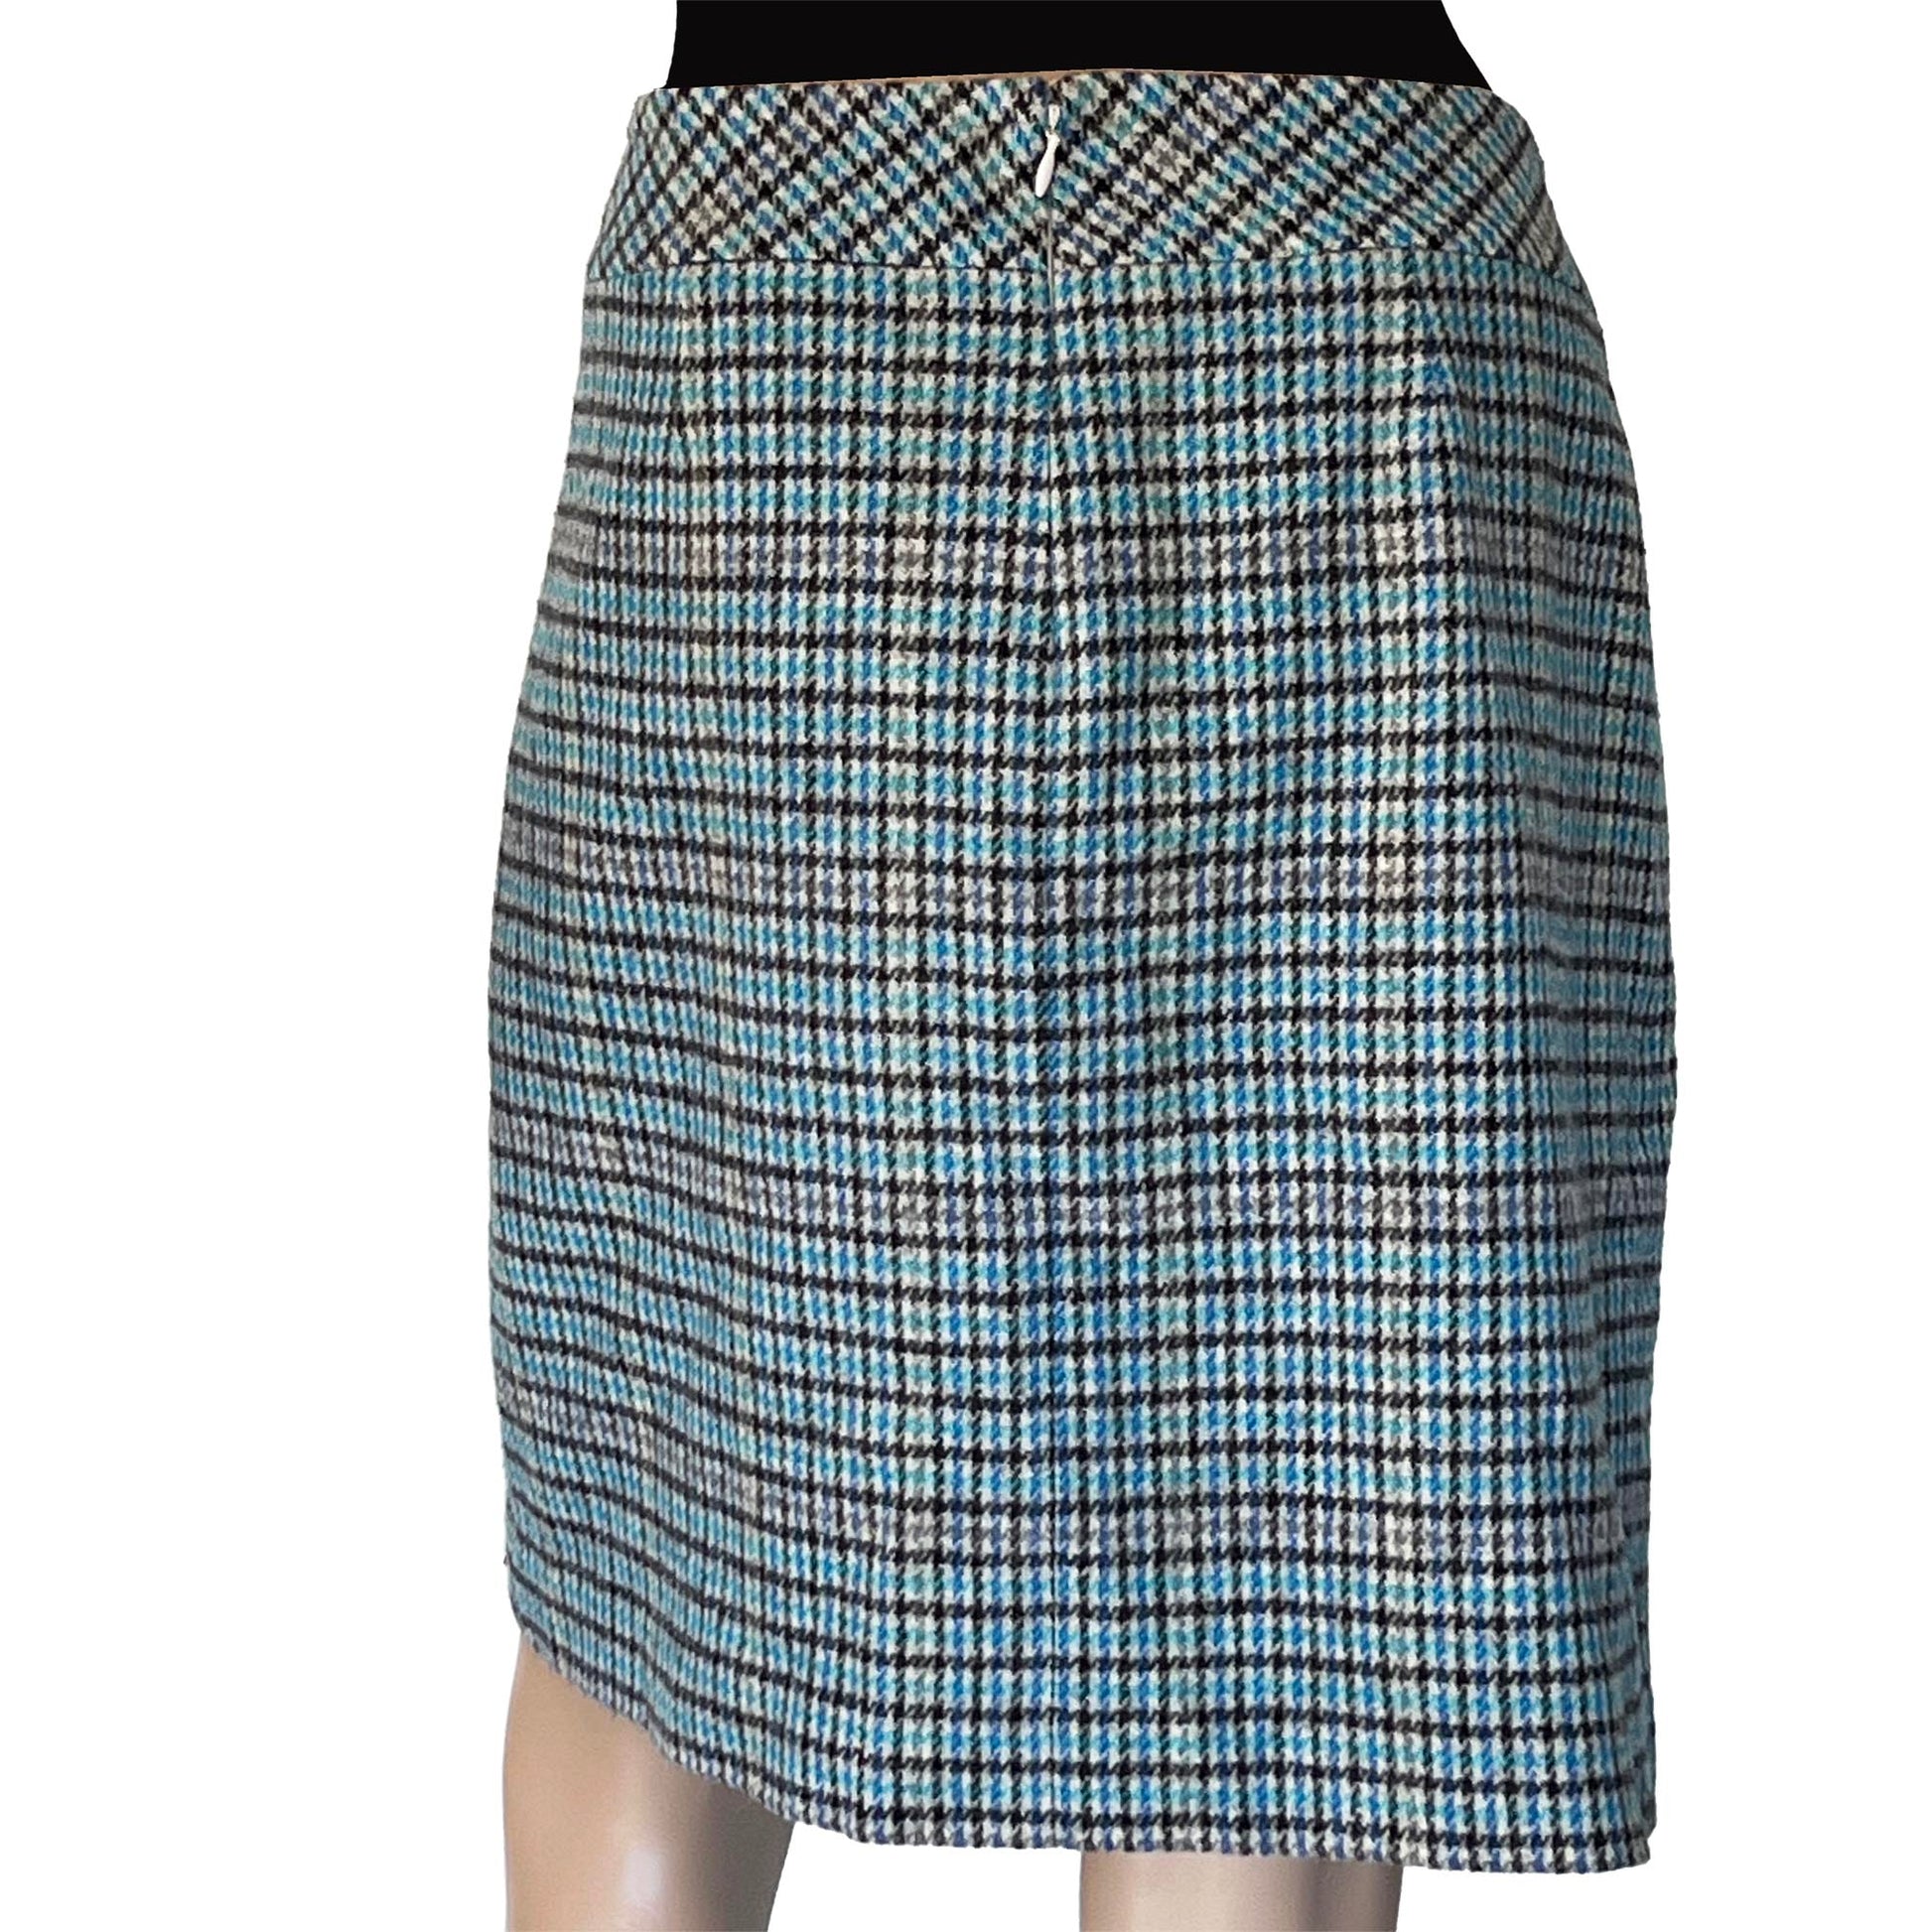 lue_-Black_-Gray-Glen_s-Plaid-Women_s-Skirt.-Back-view.-Shop-eBargainsAndDeals.com